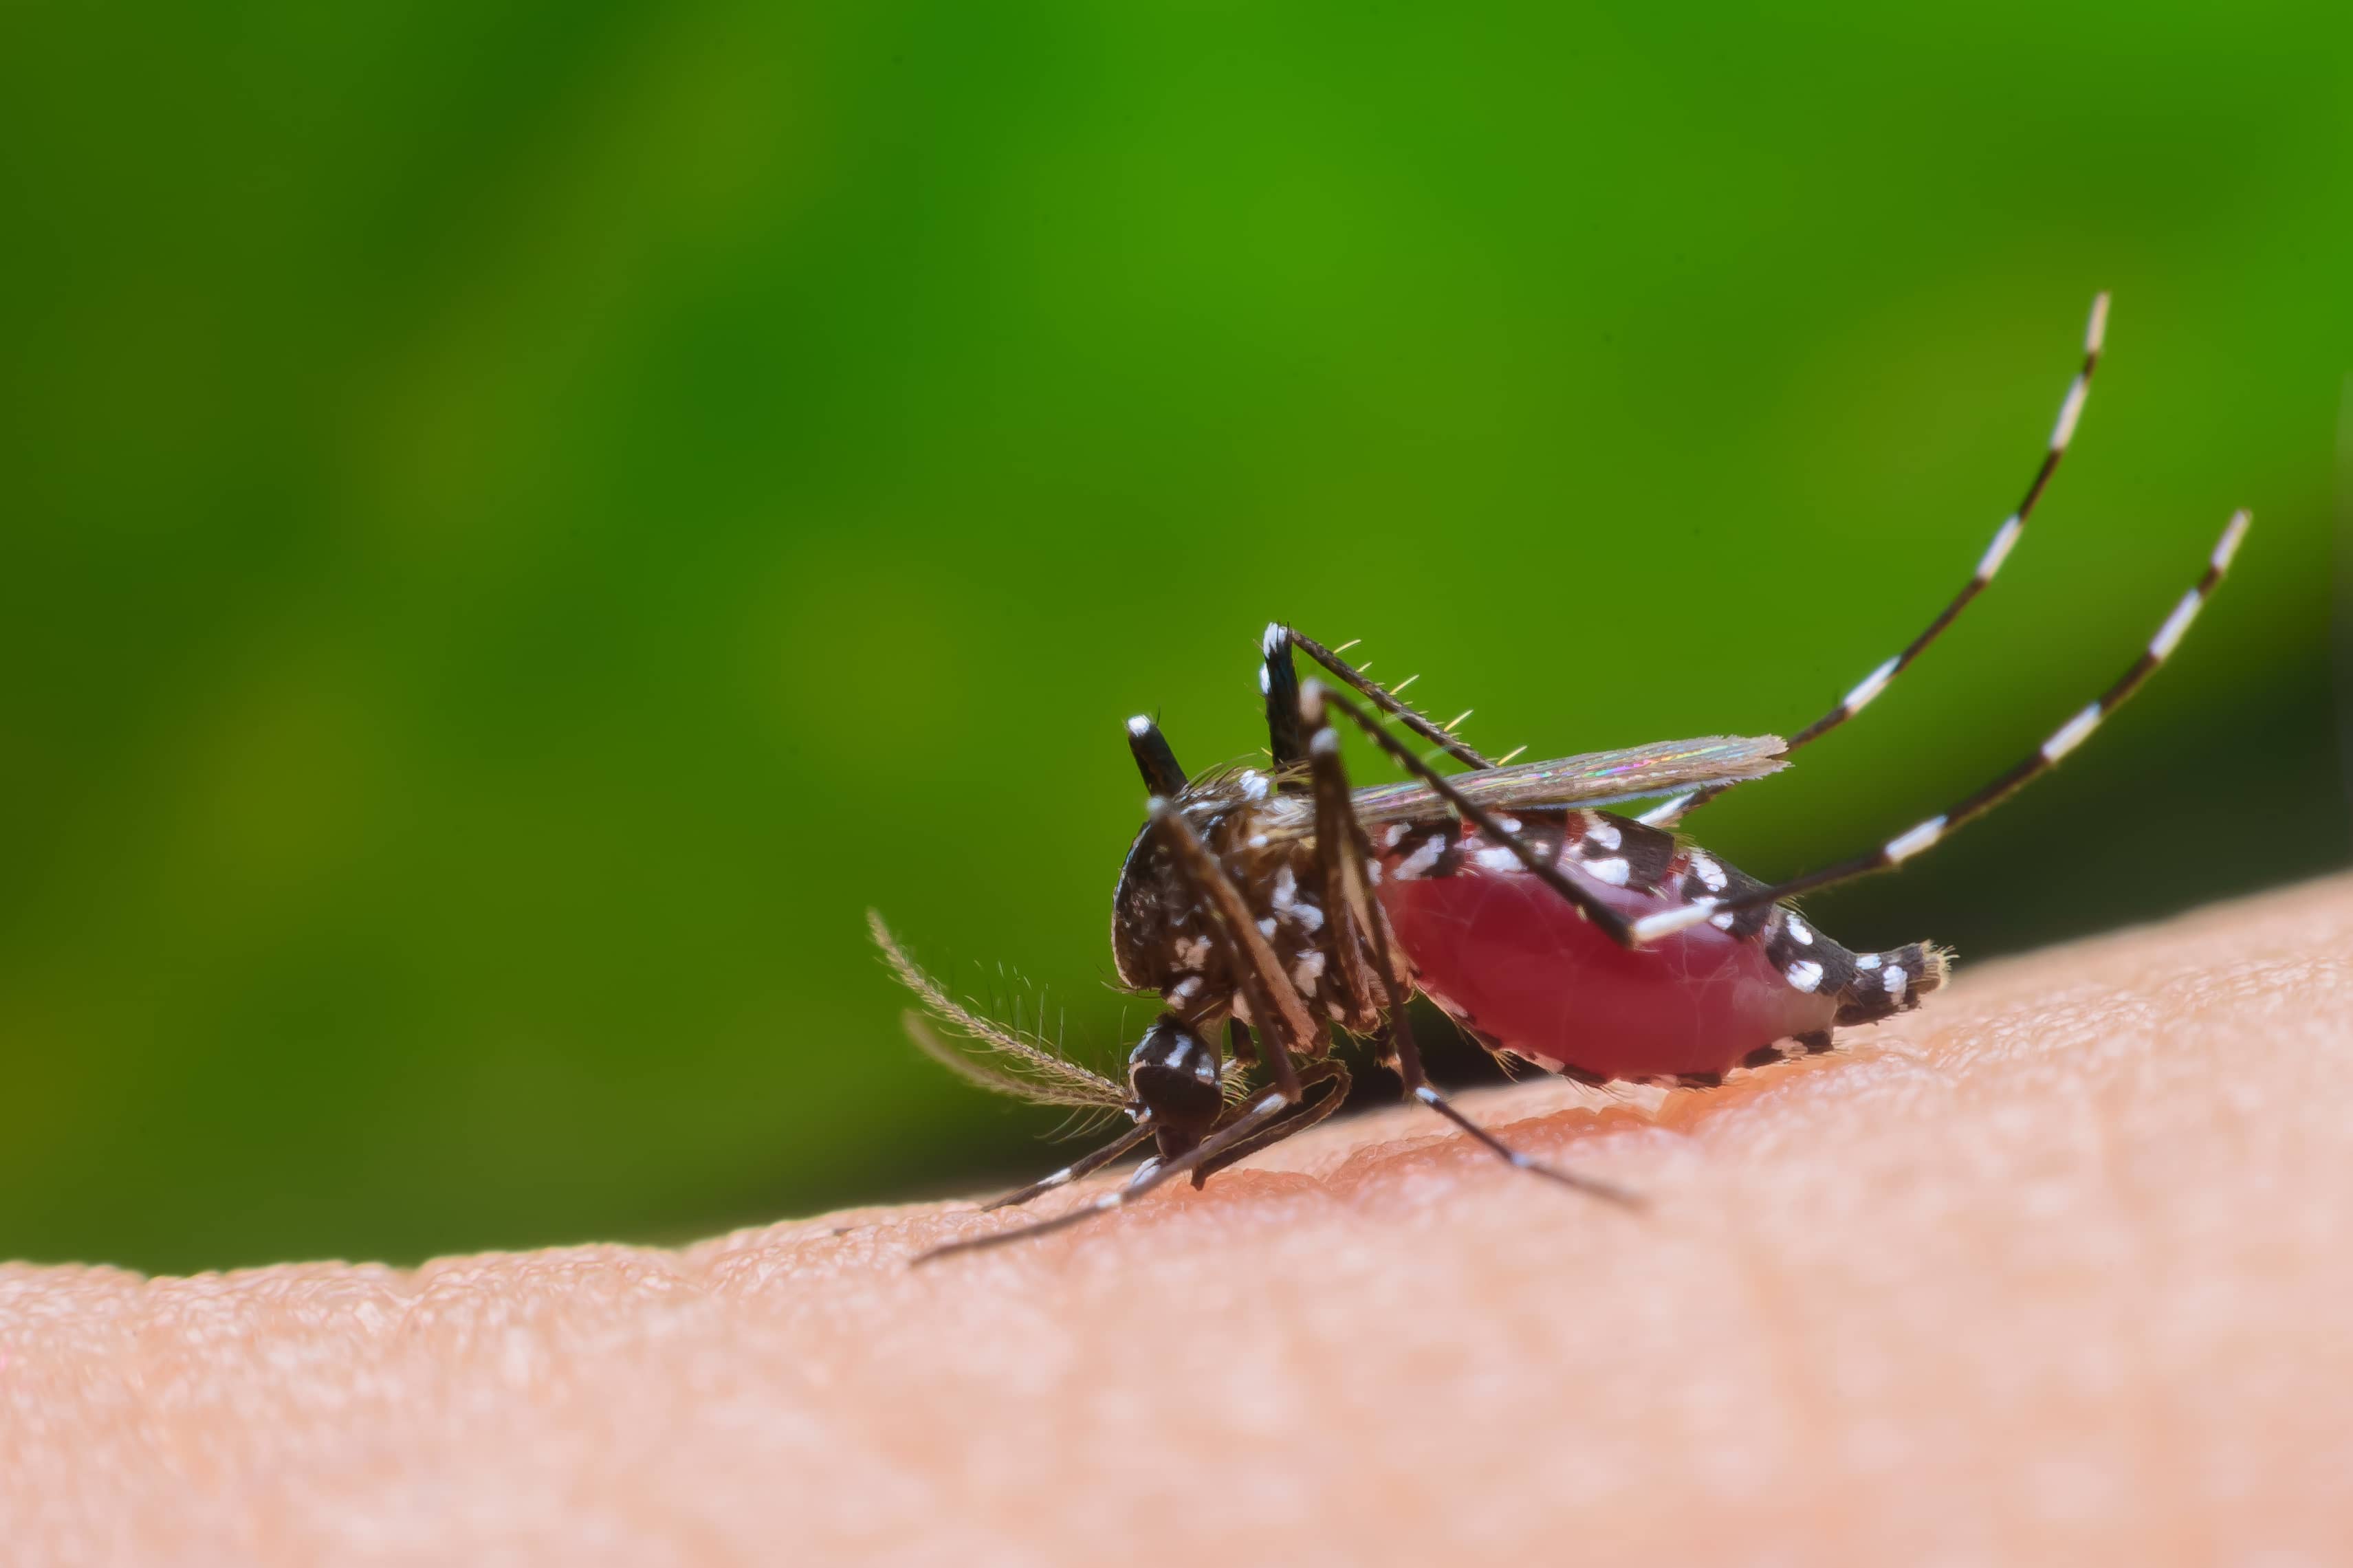 Mosquito aedes agypty picando piel humana